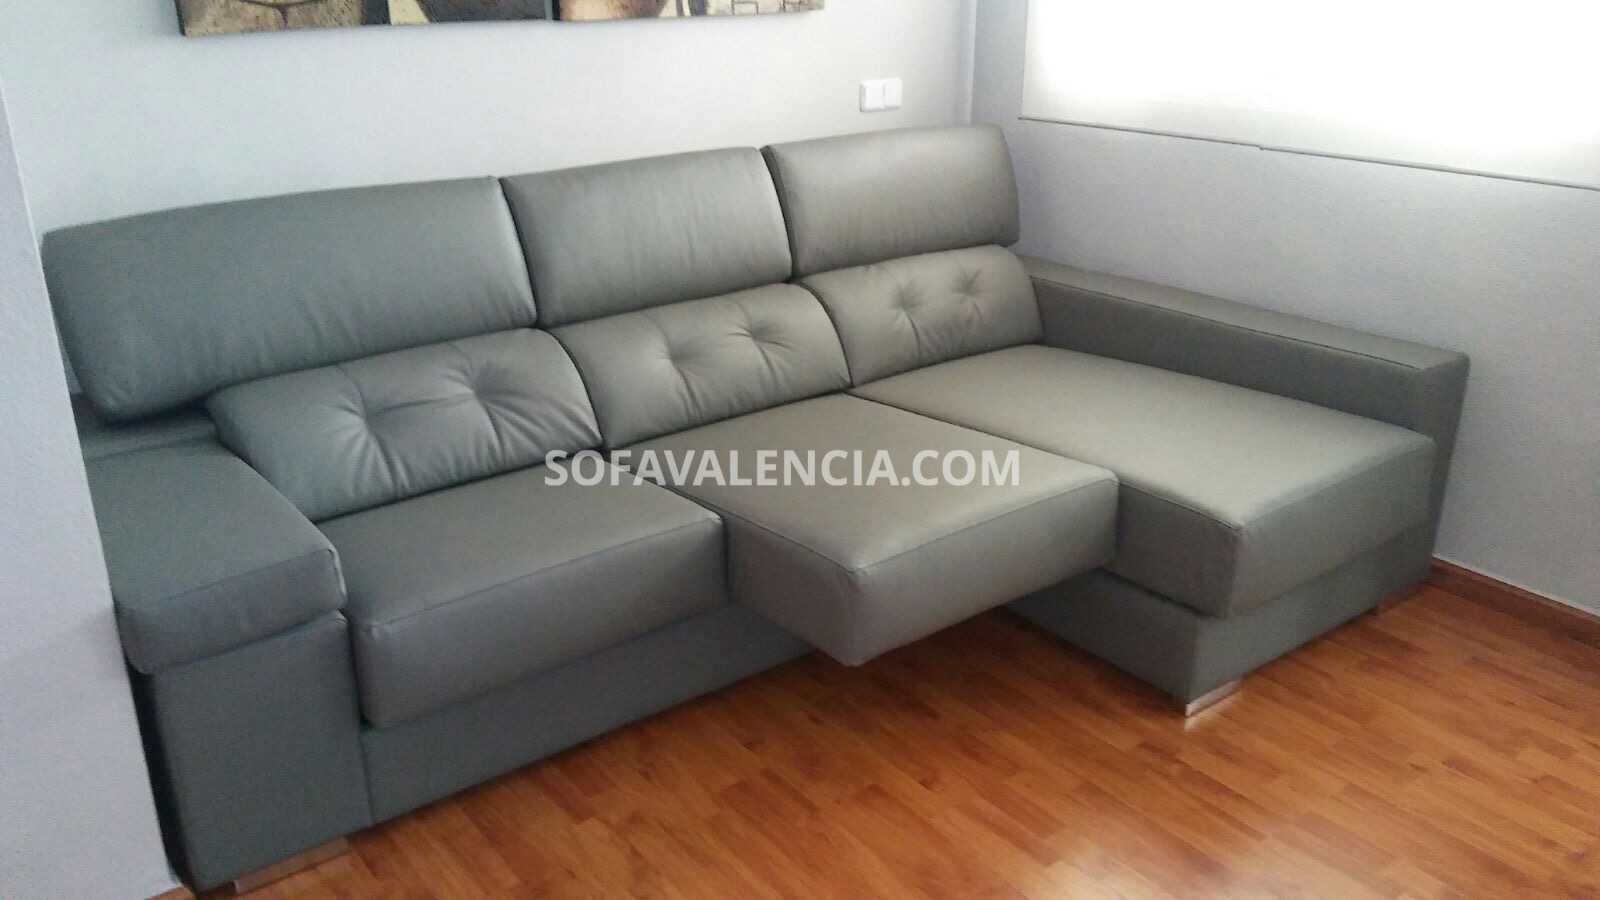 sofa-valencia-fotos-clientes-95